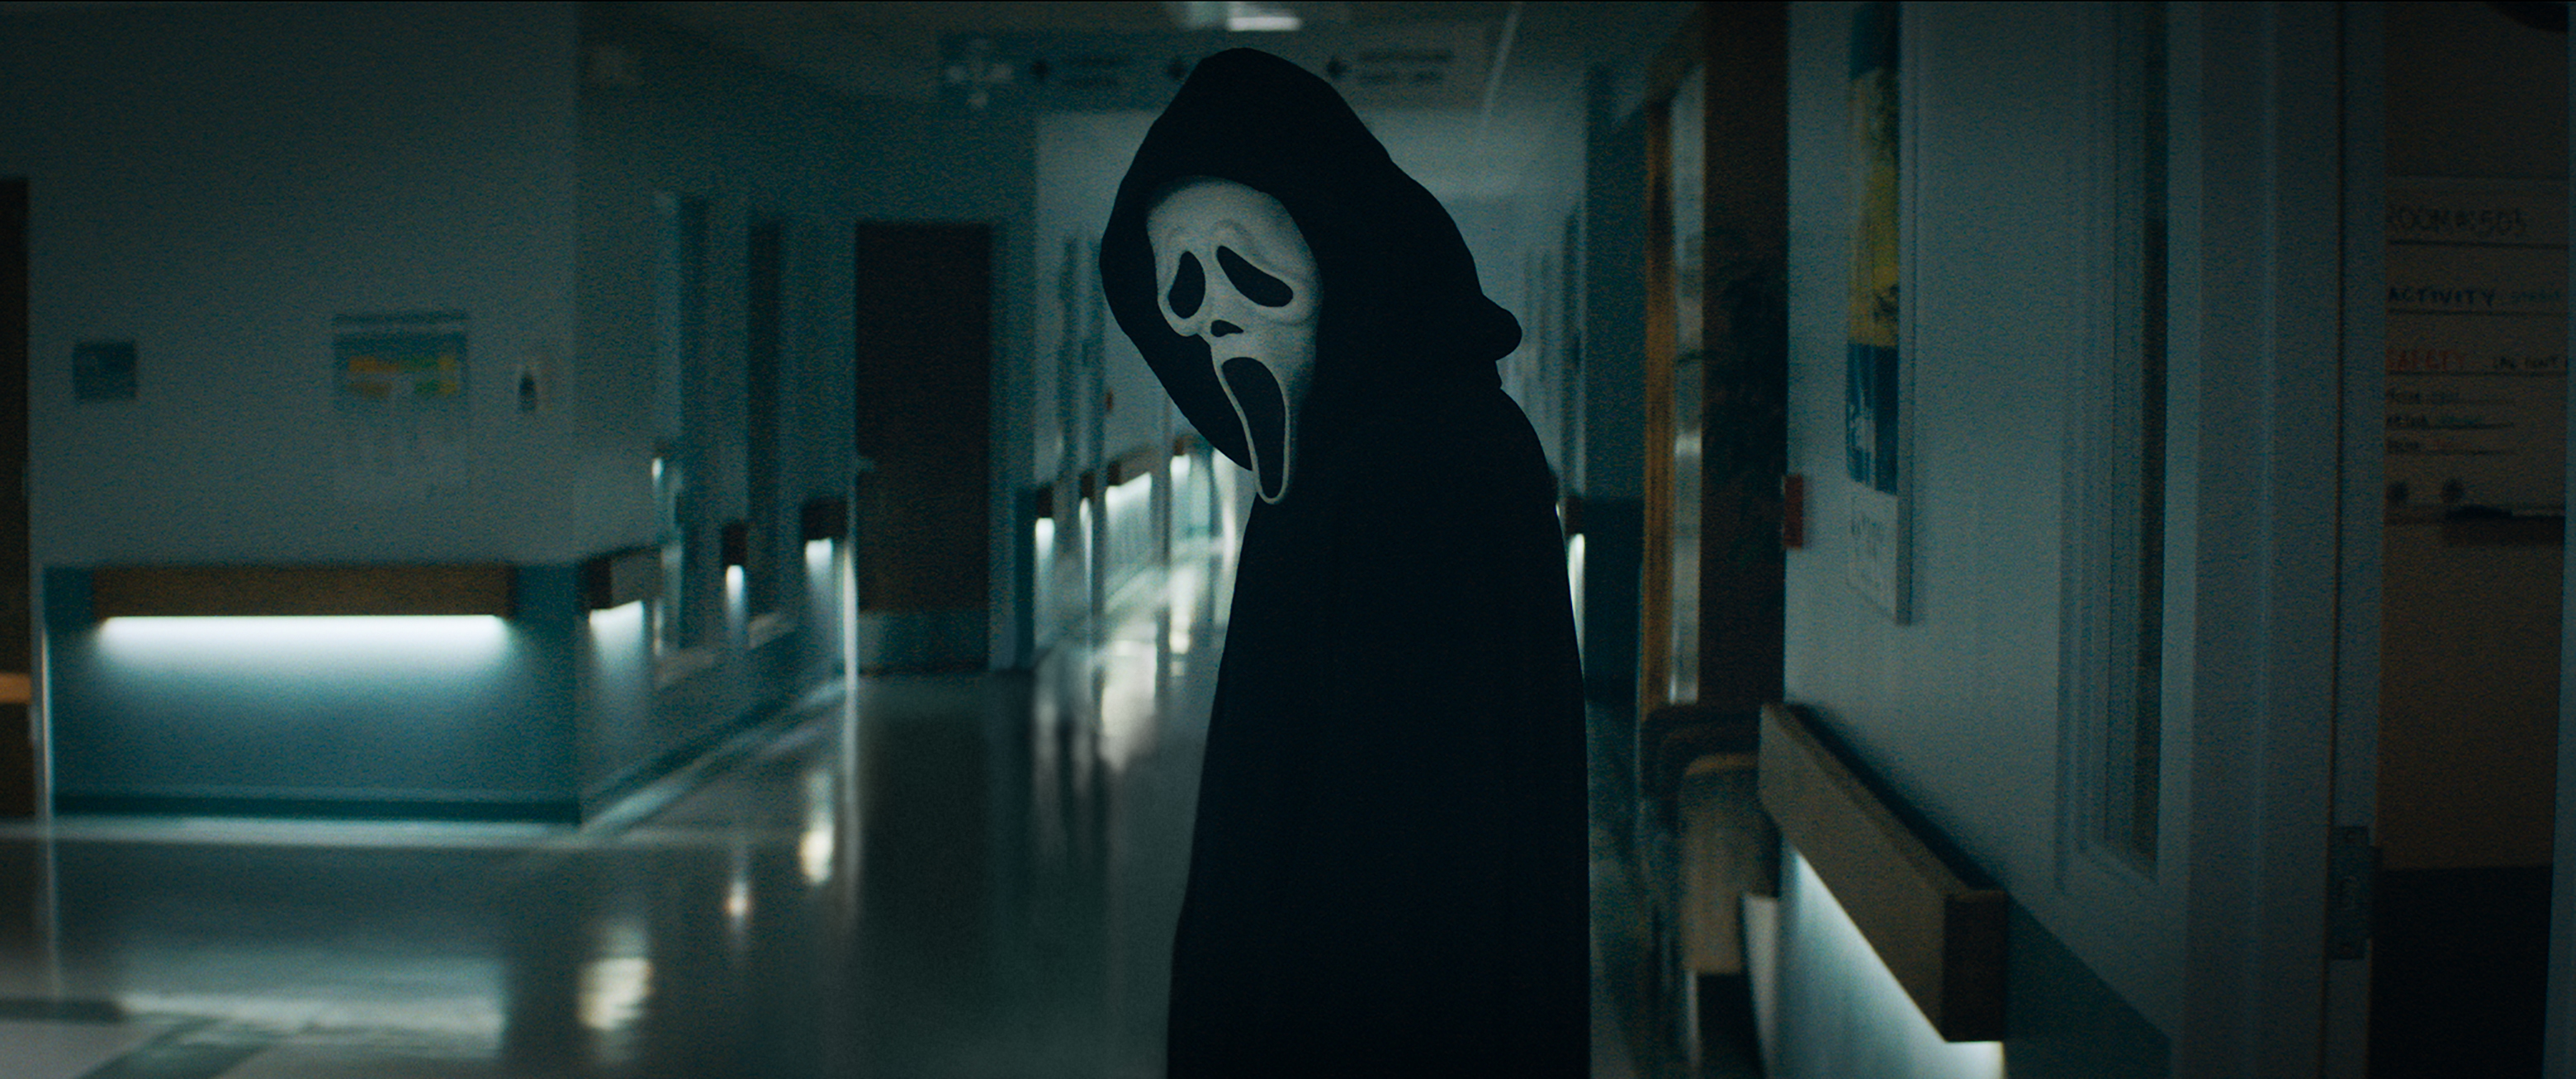 Scream (2022) Movie Tickets & Showtimes Near You